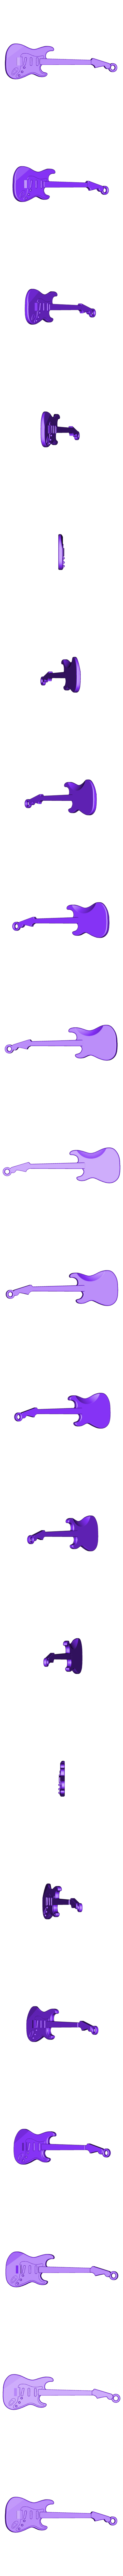 fender stratocaster .stl Download free STL file Fender Stratocaster PLA+ PLA Soft Guitar • Object to 3D print, gerbat